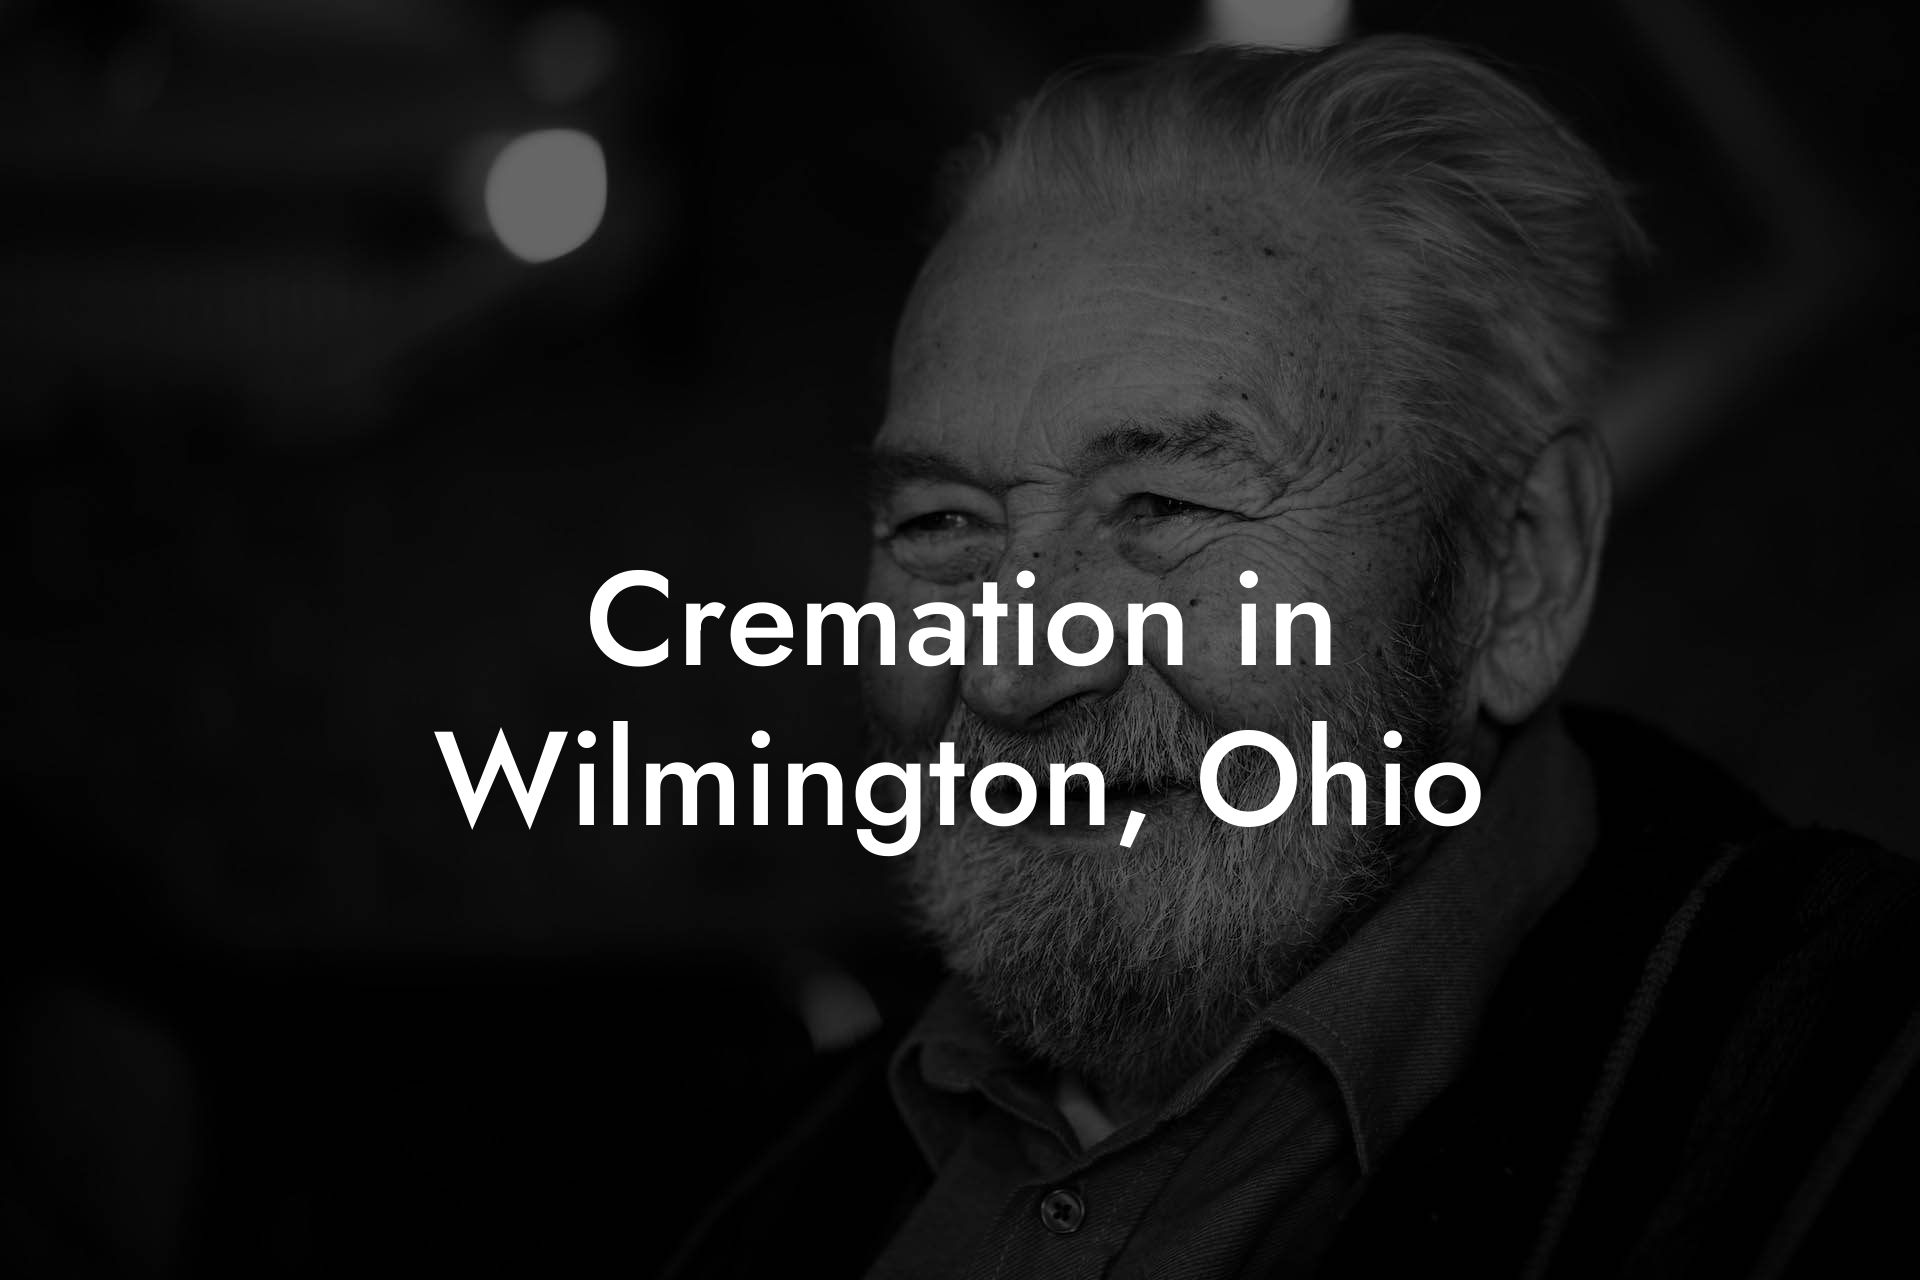 Cremation in Wilmington, Ohio